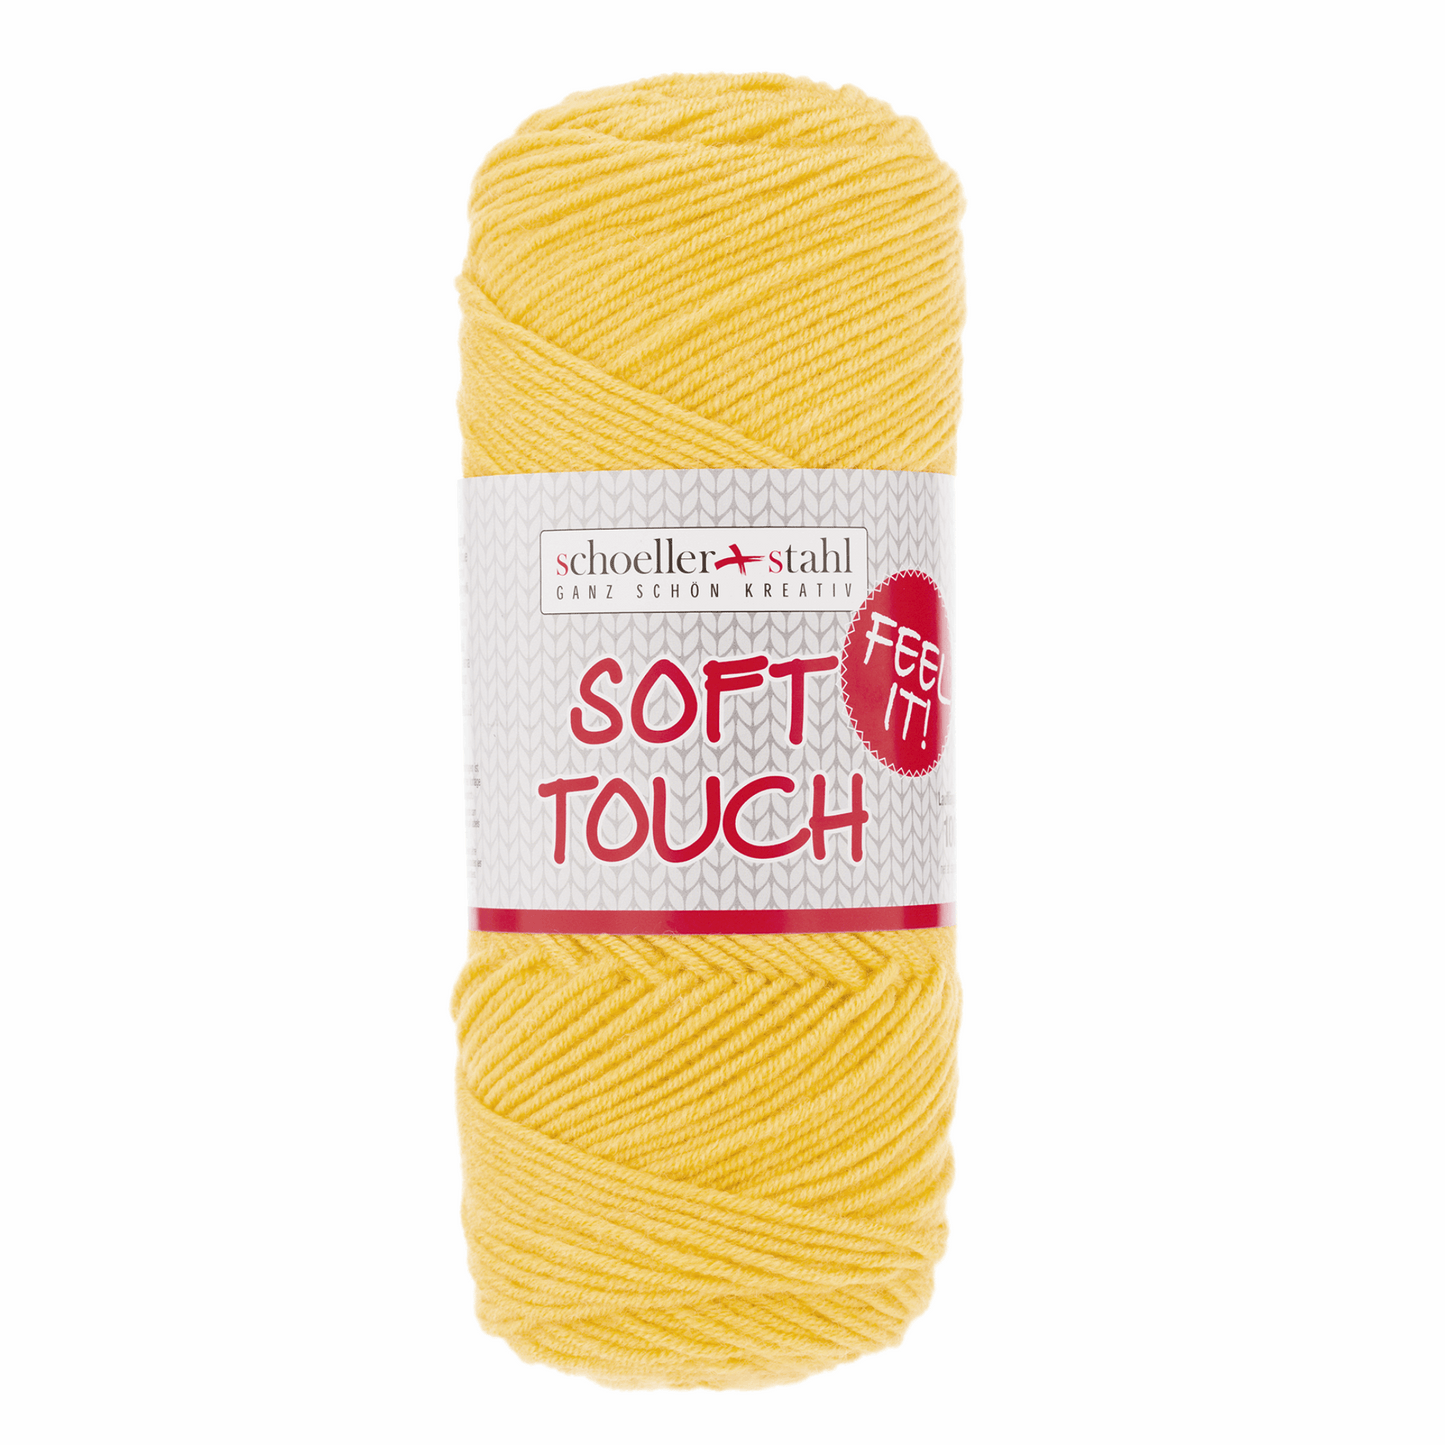 Soft touch 100g pullskin, 90283, Farbe 9, mais